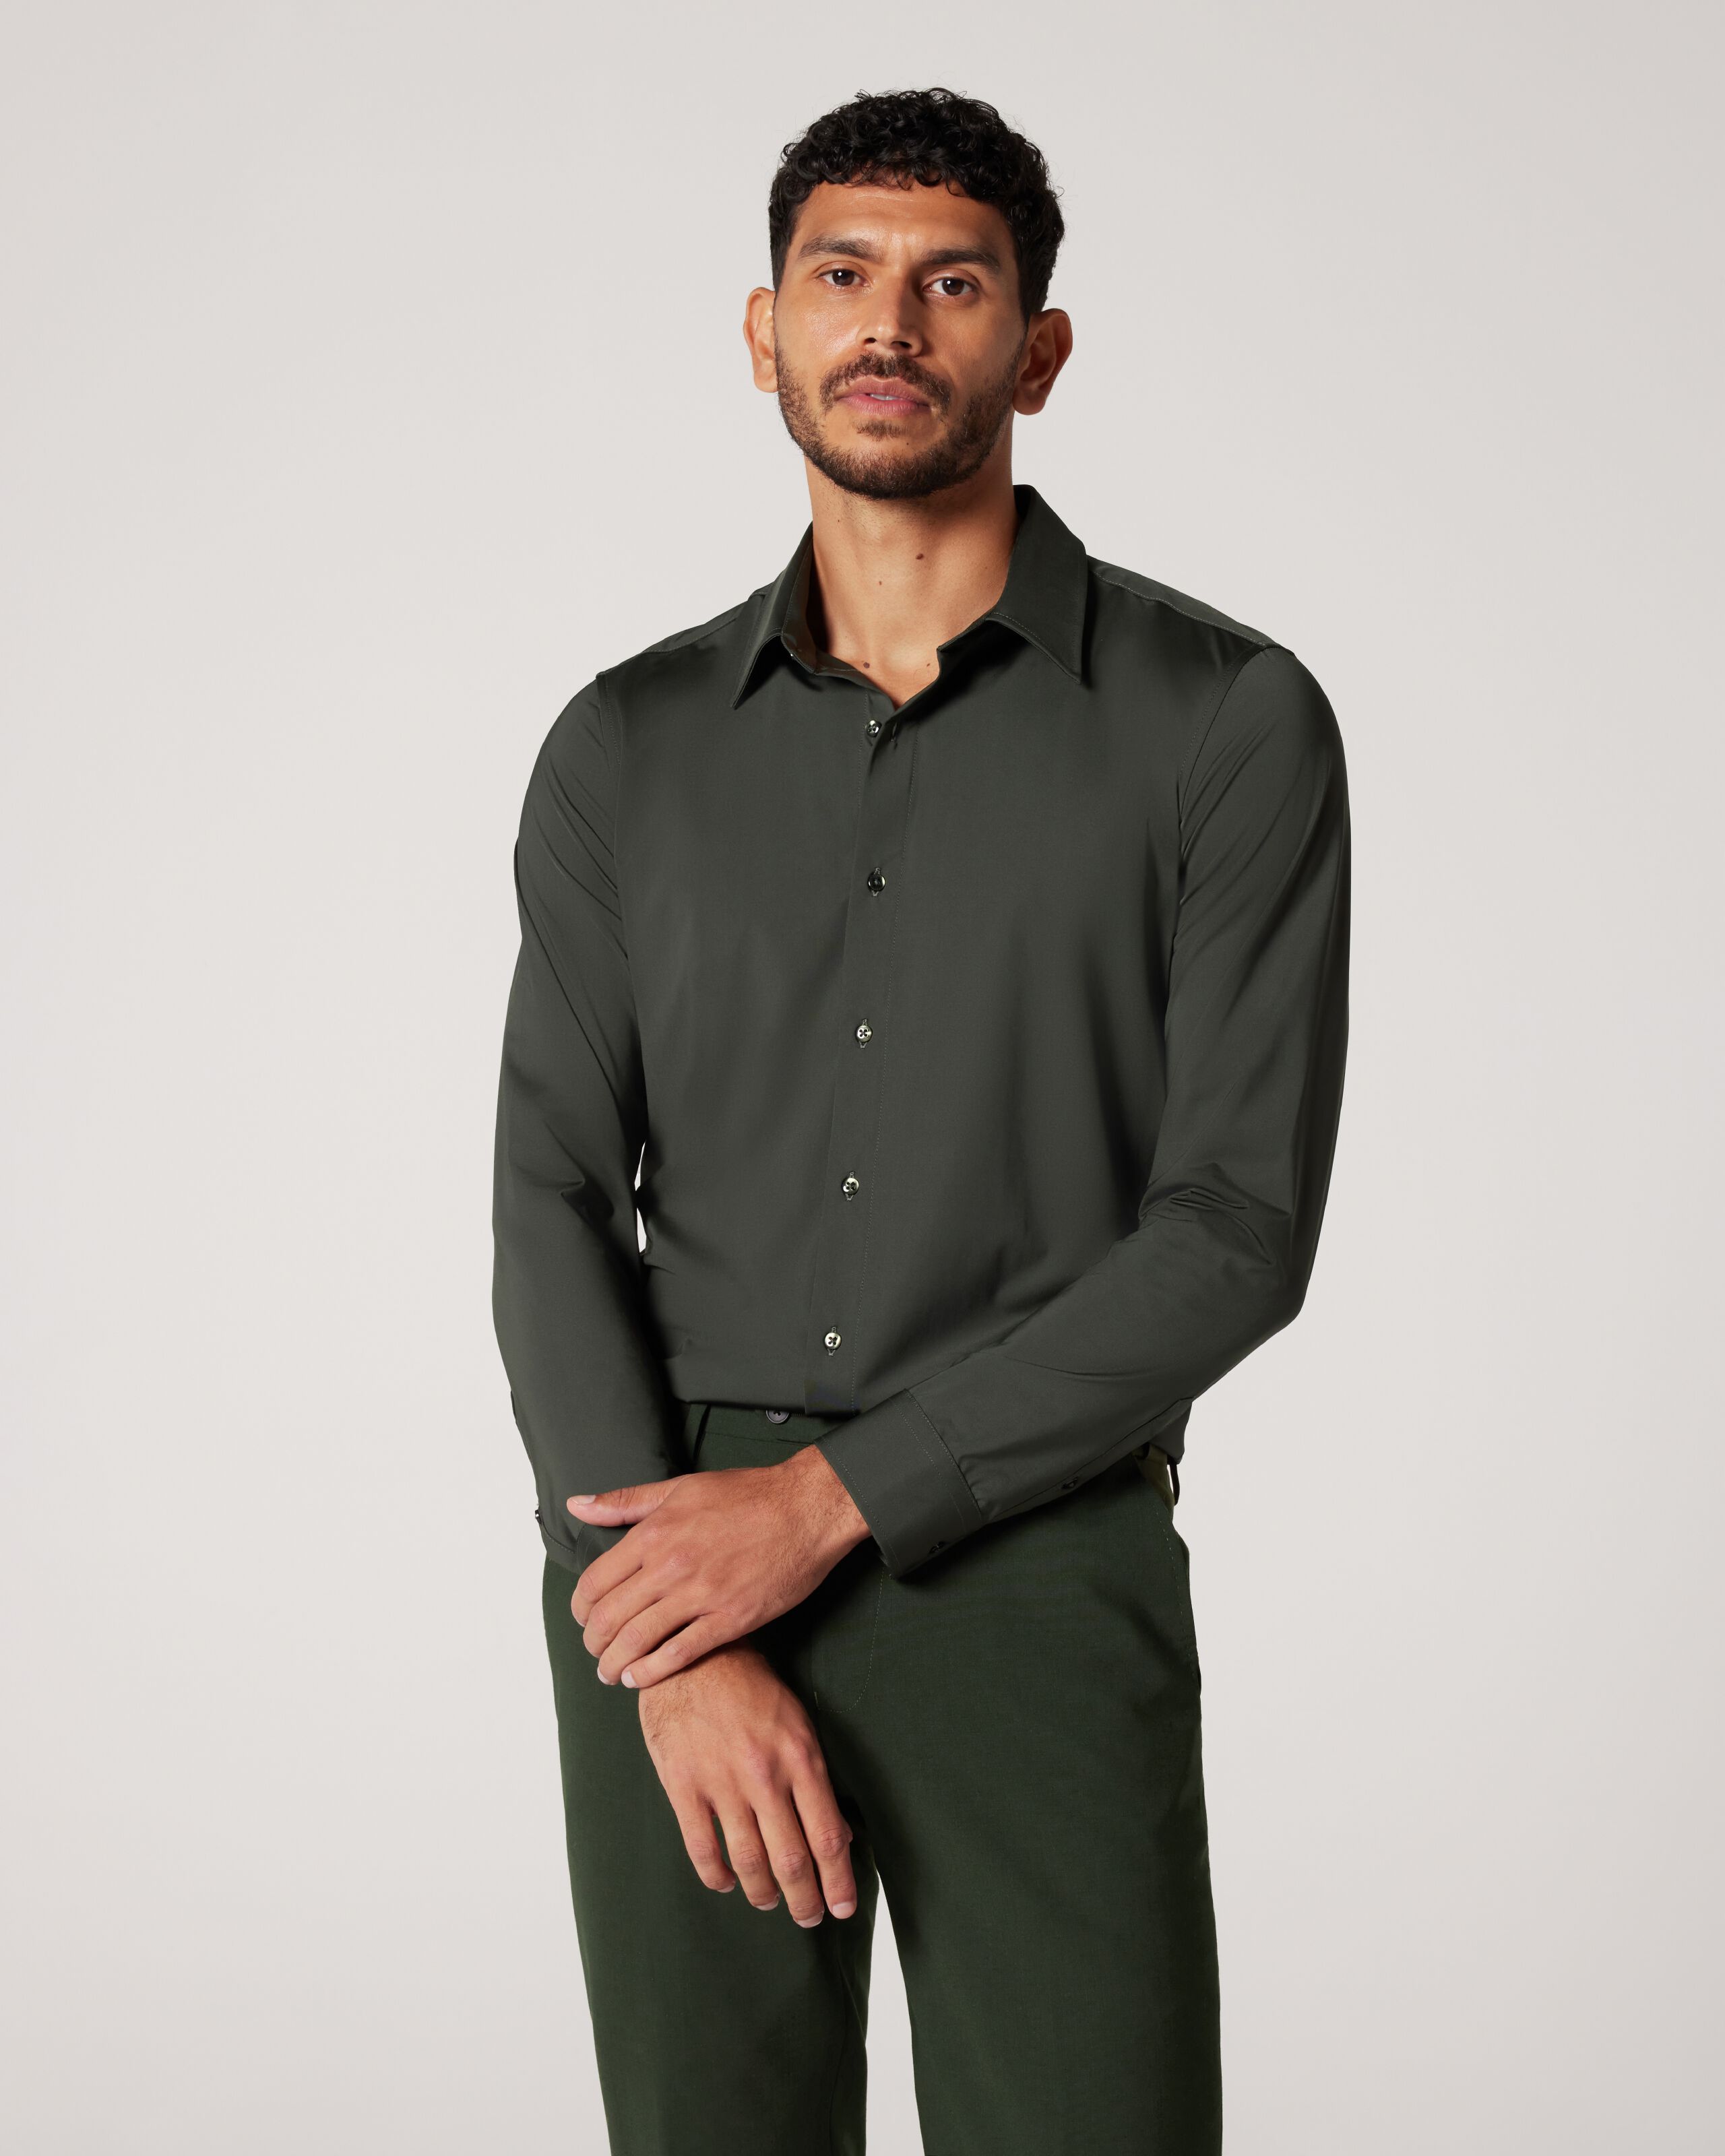 Green Pants Matching Shirt Ideas | Green Pant Combination Shirts -  TiptopGents | Casual shirts outfit, Mens outfits, Green pants men